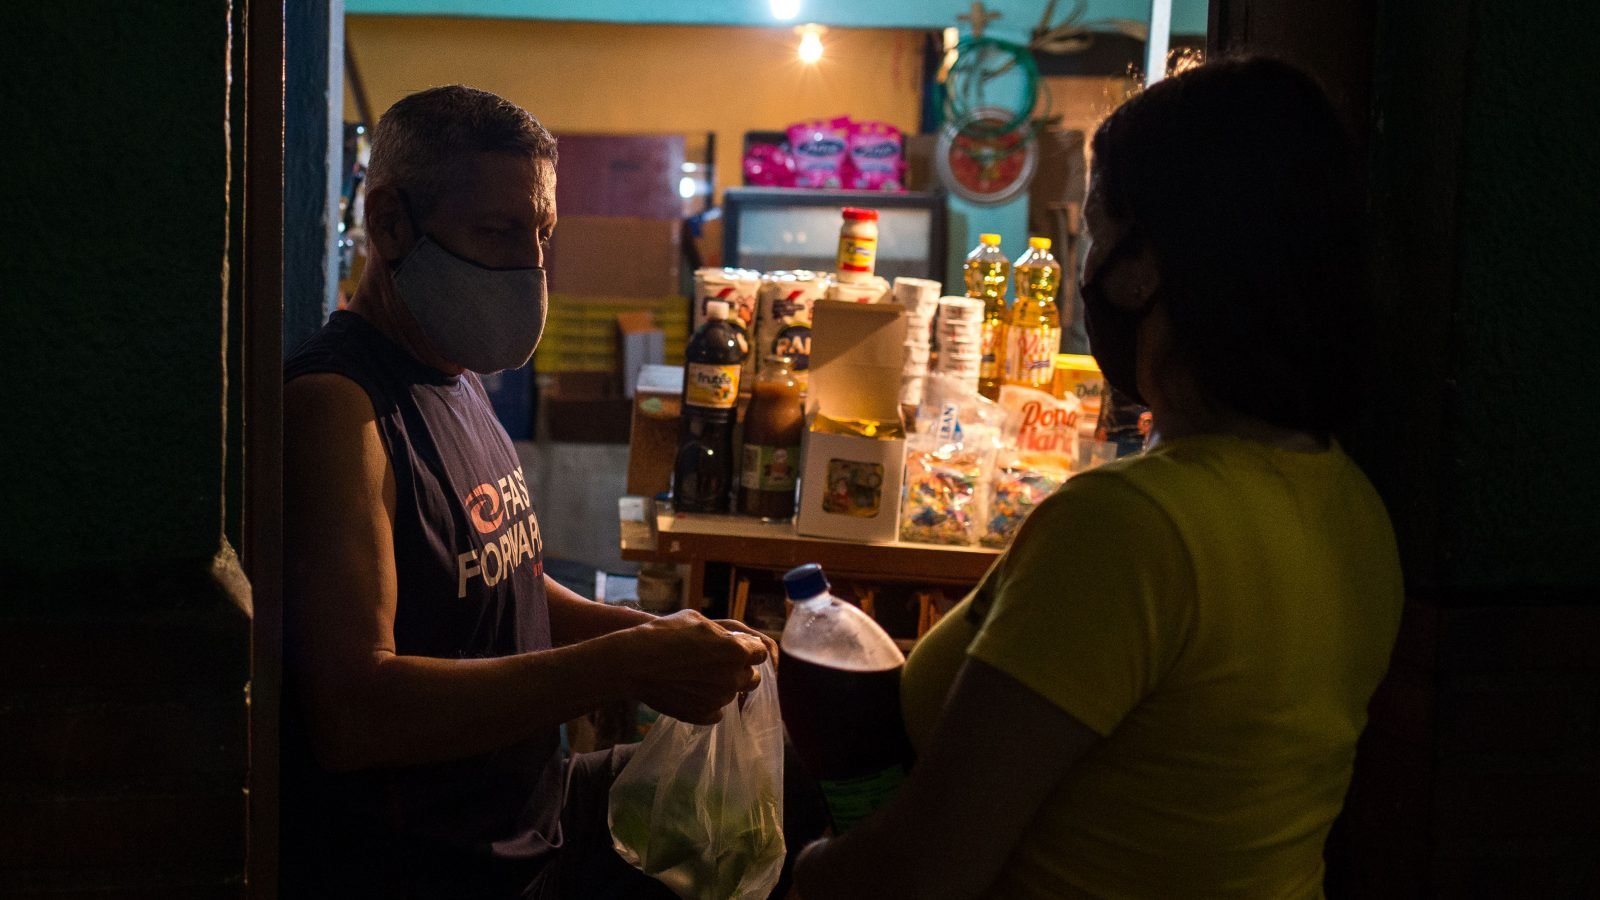 Venezuela’s economic crisis has made it a regional leader in digital payments